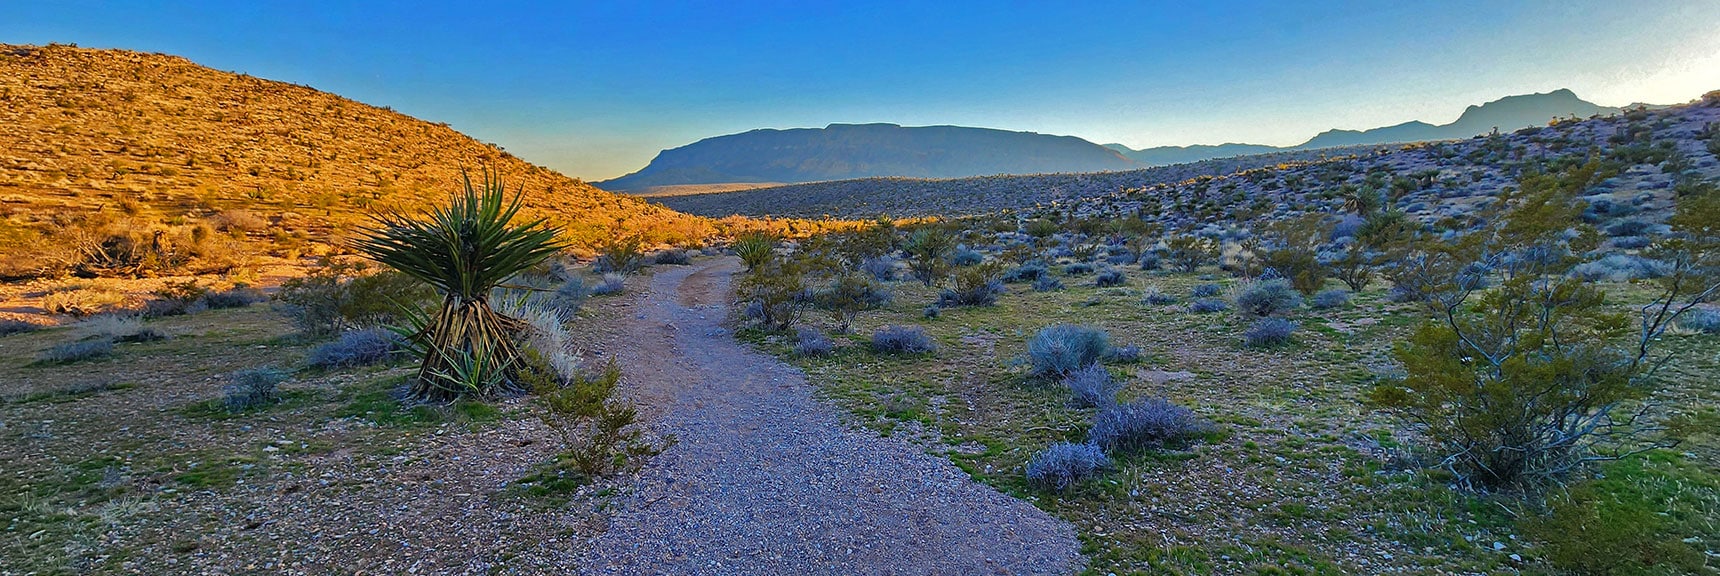 Continue on Gene's Trail Over Ridge to Right, Then Down to Gene's Trailhead | Brownstone Trail | Calico Basin | Brownstone Basin | La Madre Mountains Wilderness, Nevada